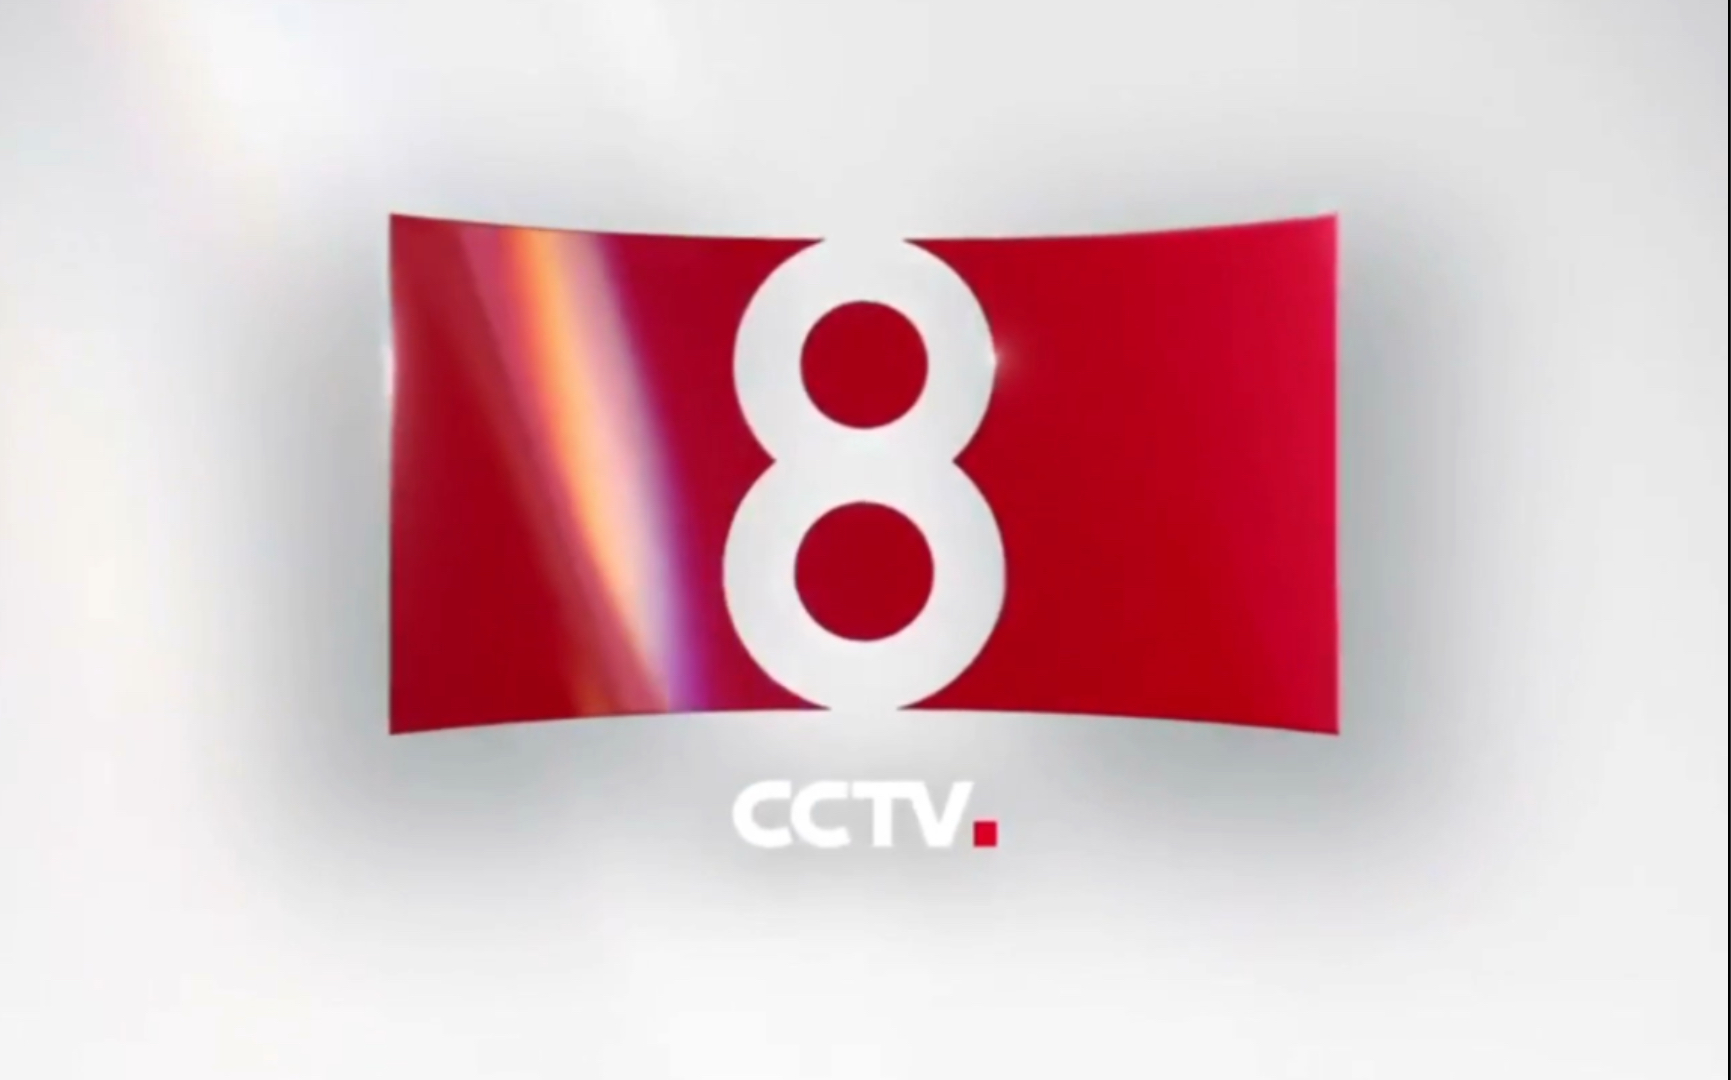 cctv8广告哔哩哔哩广告图片